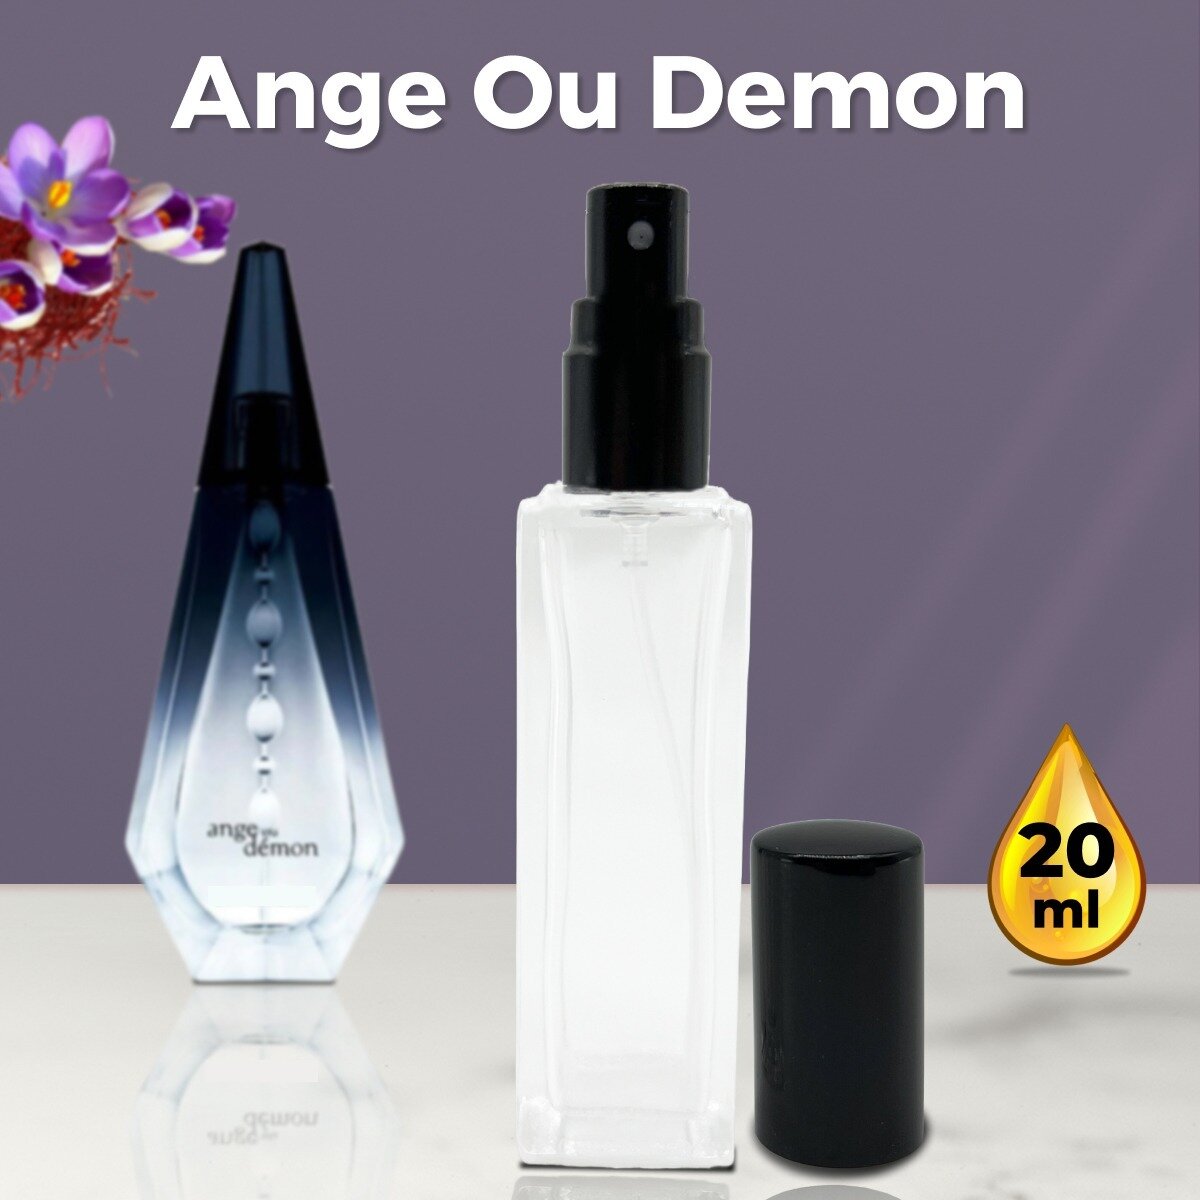 "Ange on Demon" - Духи женские 20 мл + подарок 1 мл другого аромата